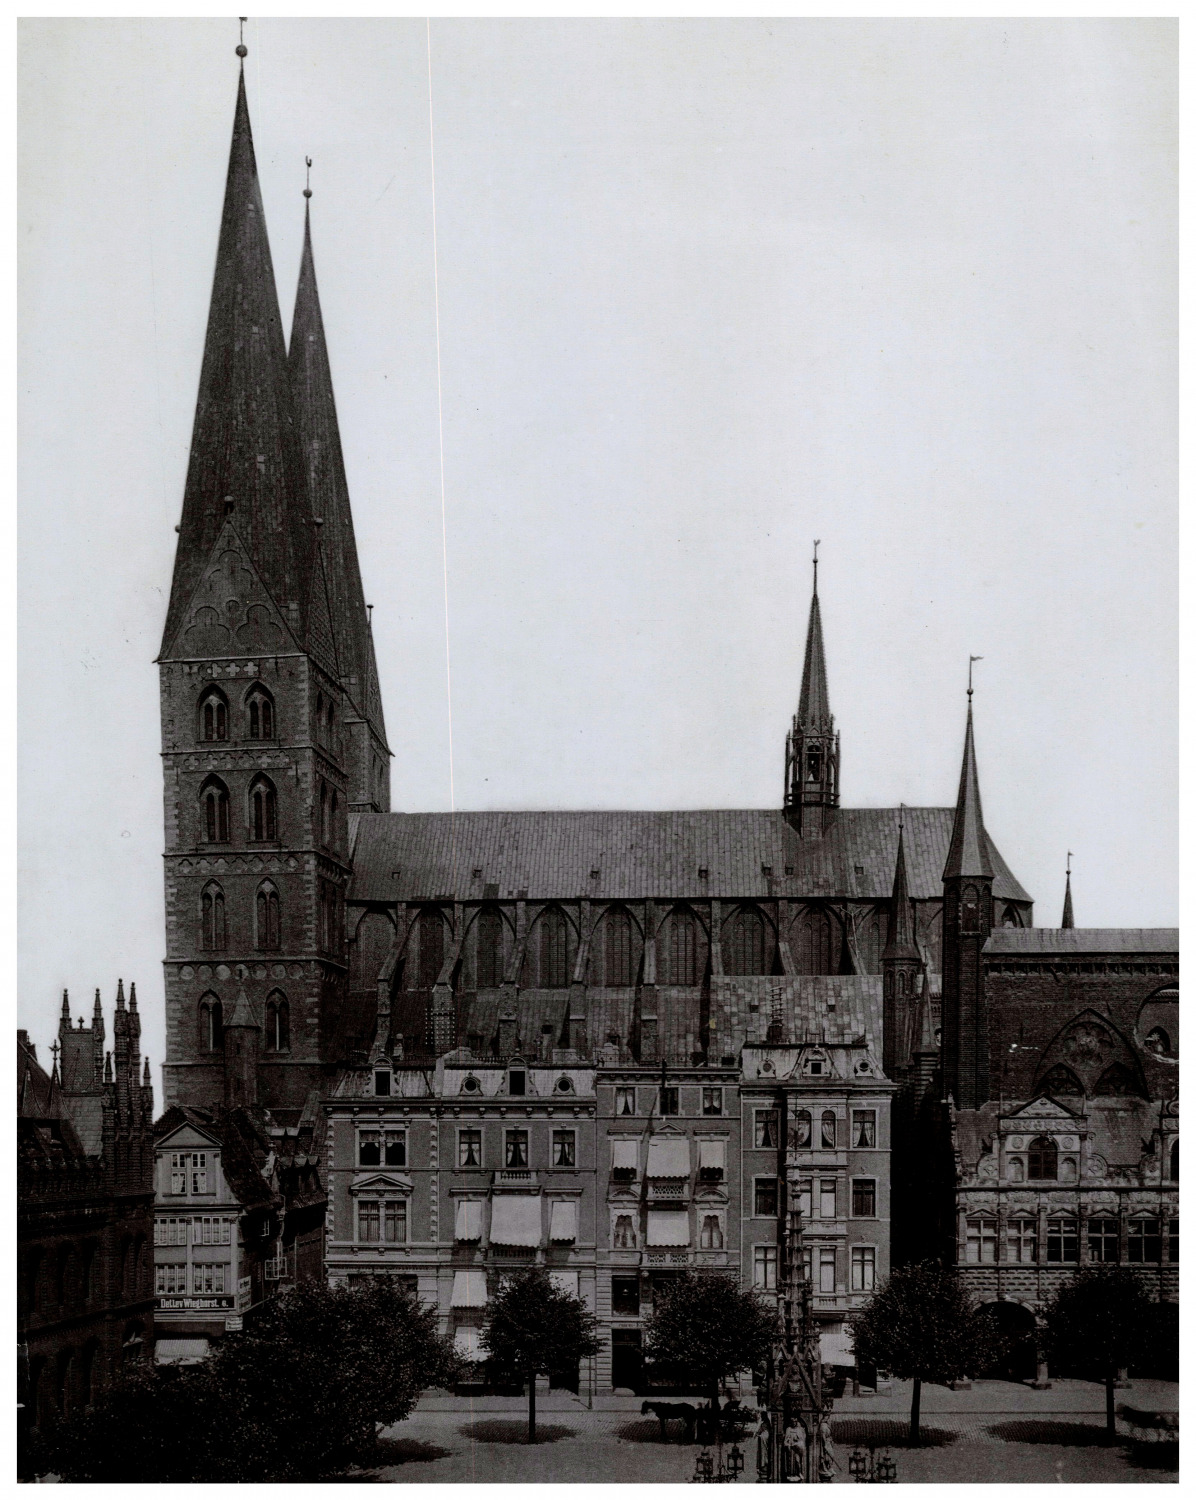 Germany, Lübeck, Marienkirche, Old Town print print print print print print print print, photomeca